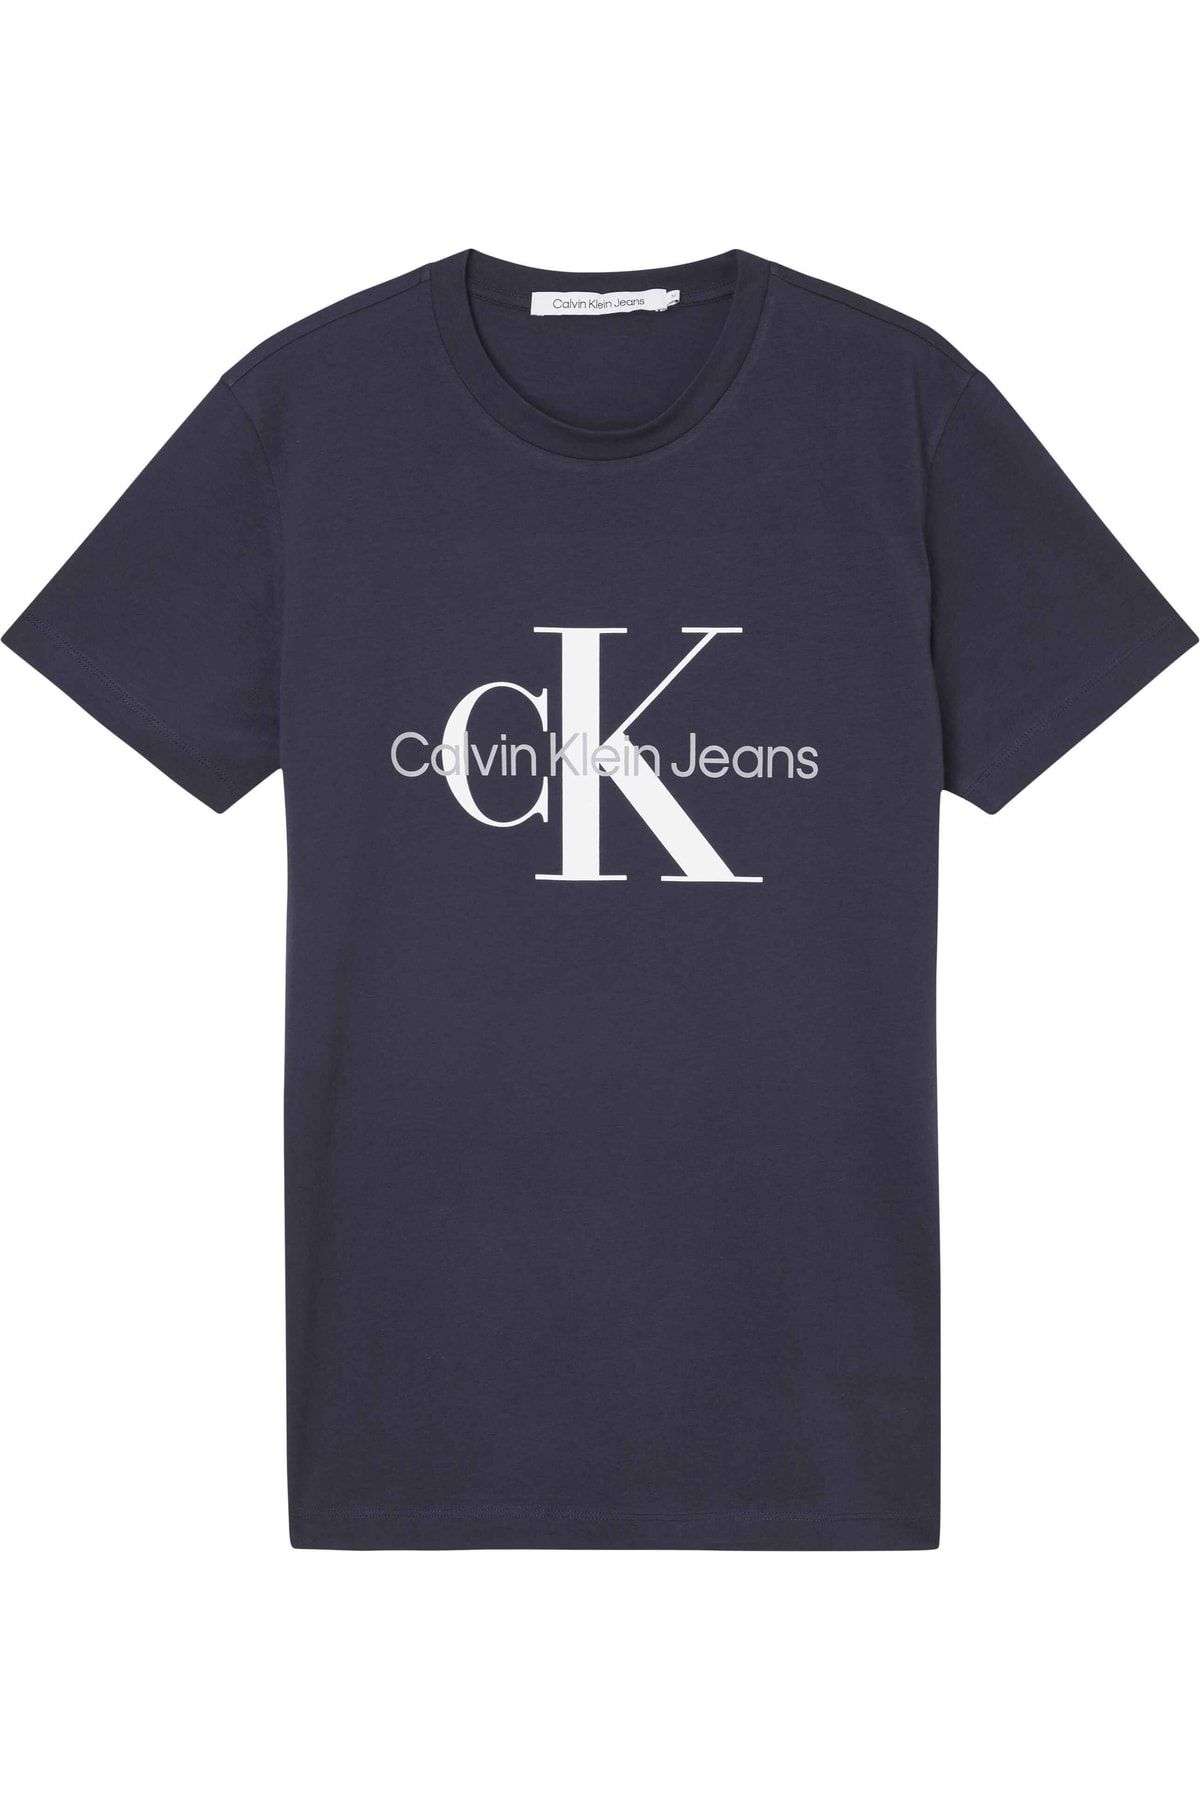 Calvin Klein Neck Shirt T Fit Slim Trendyol Shirt Chw Men\'s Crew - T J30j320935 Cotton